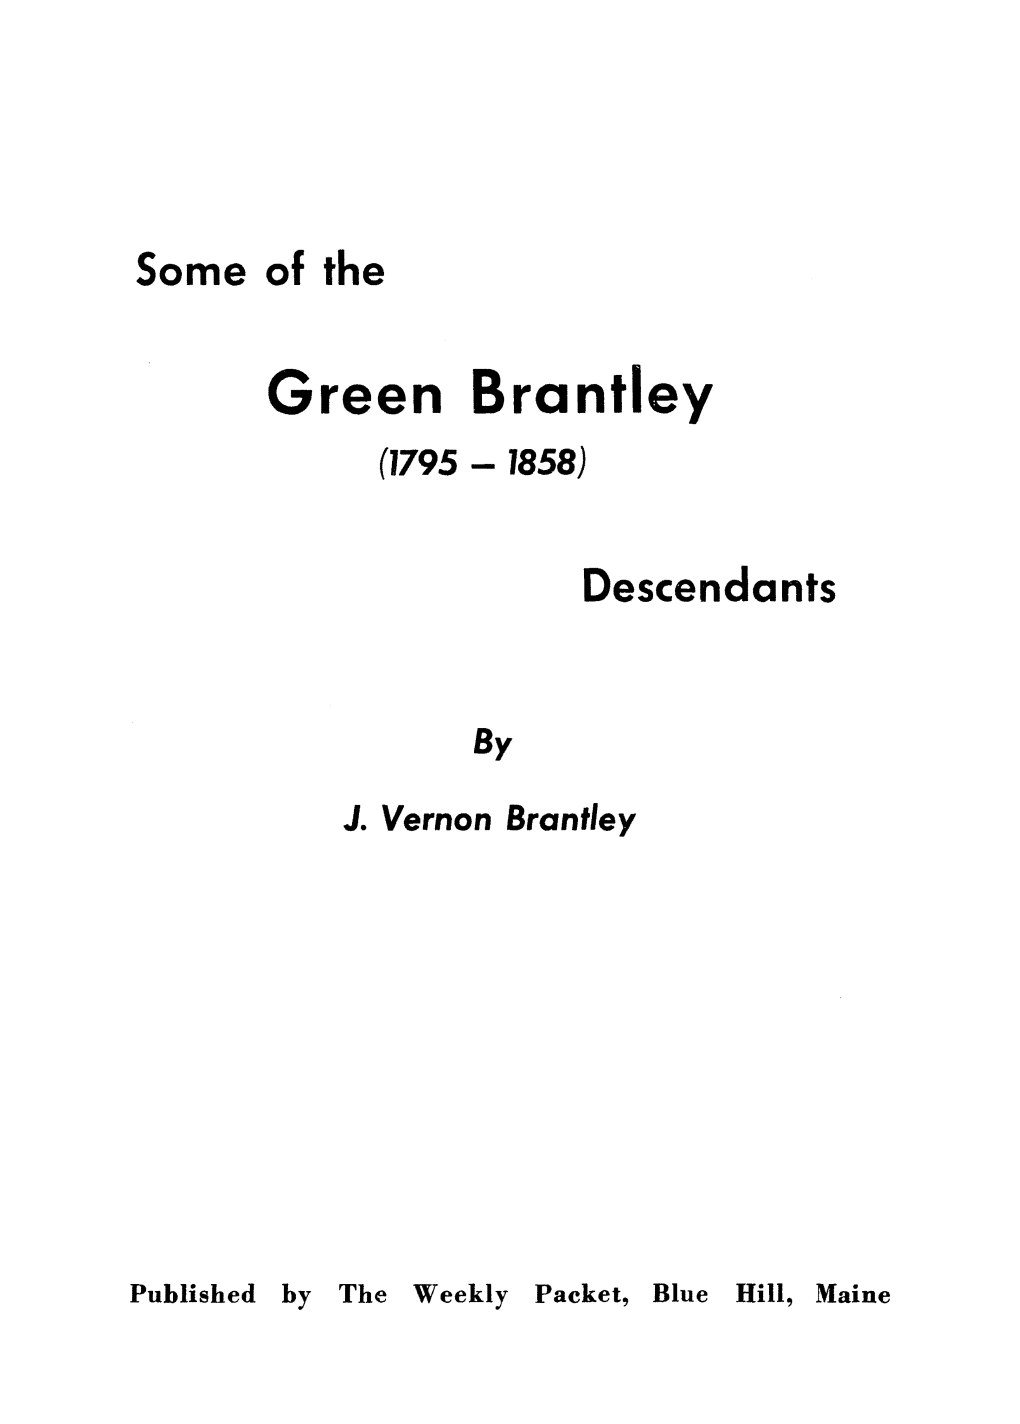 Green Brantley (1795 - 1858)